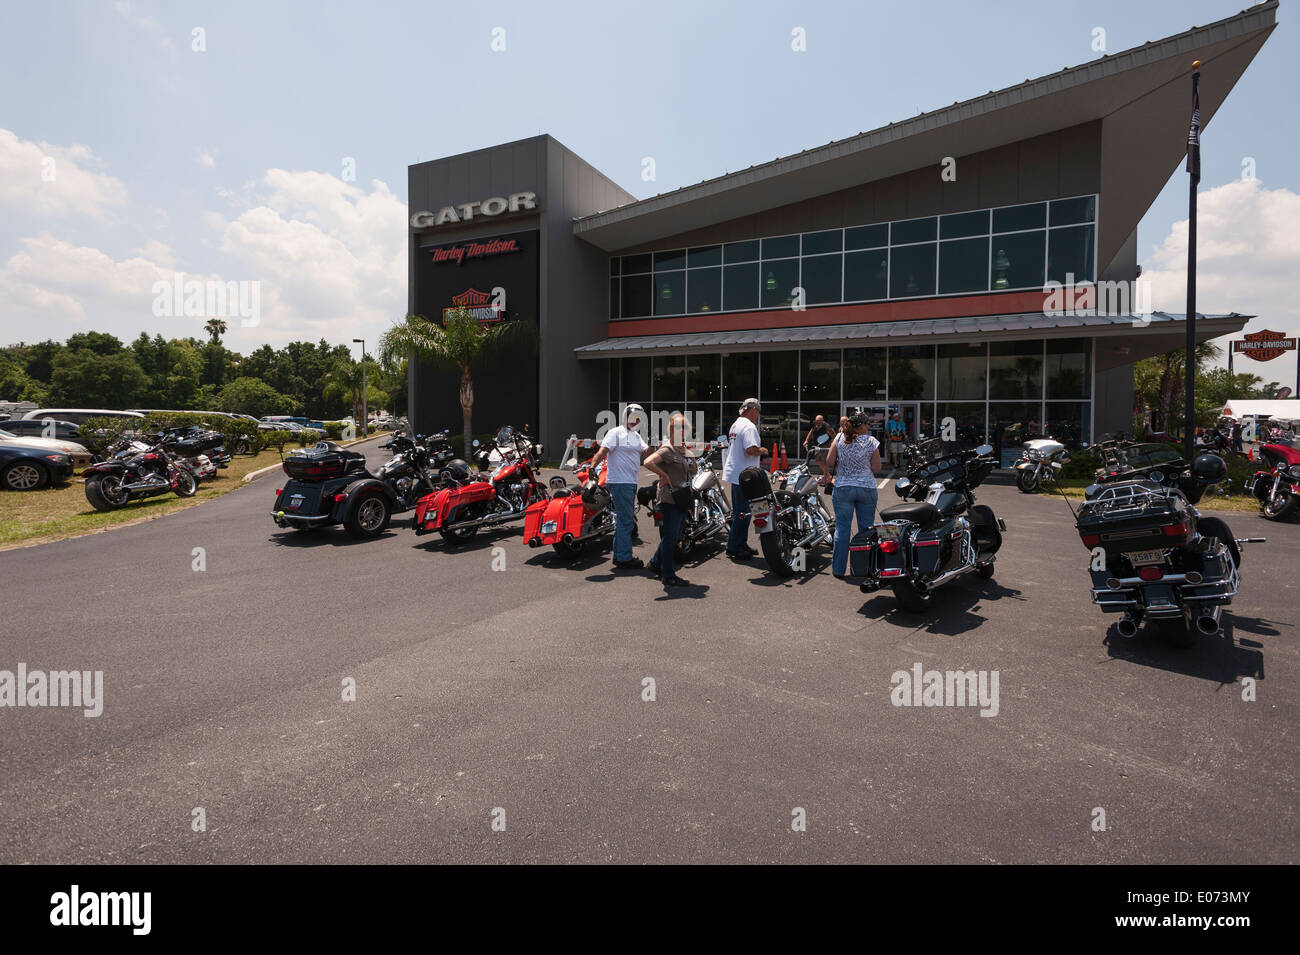 Harley Davidson motorcycle Dealership Leesburg, Florida USA Stock Photo